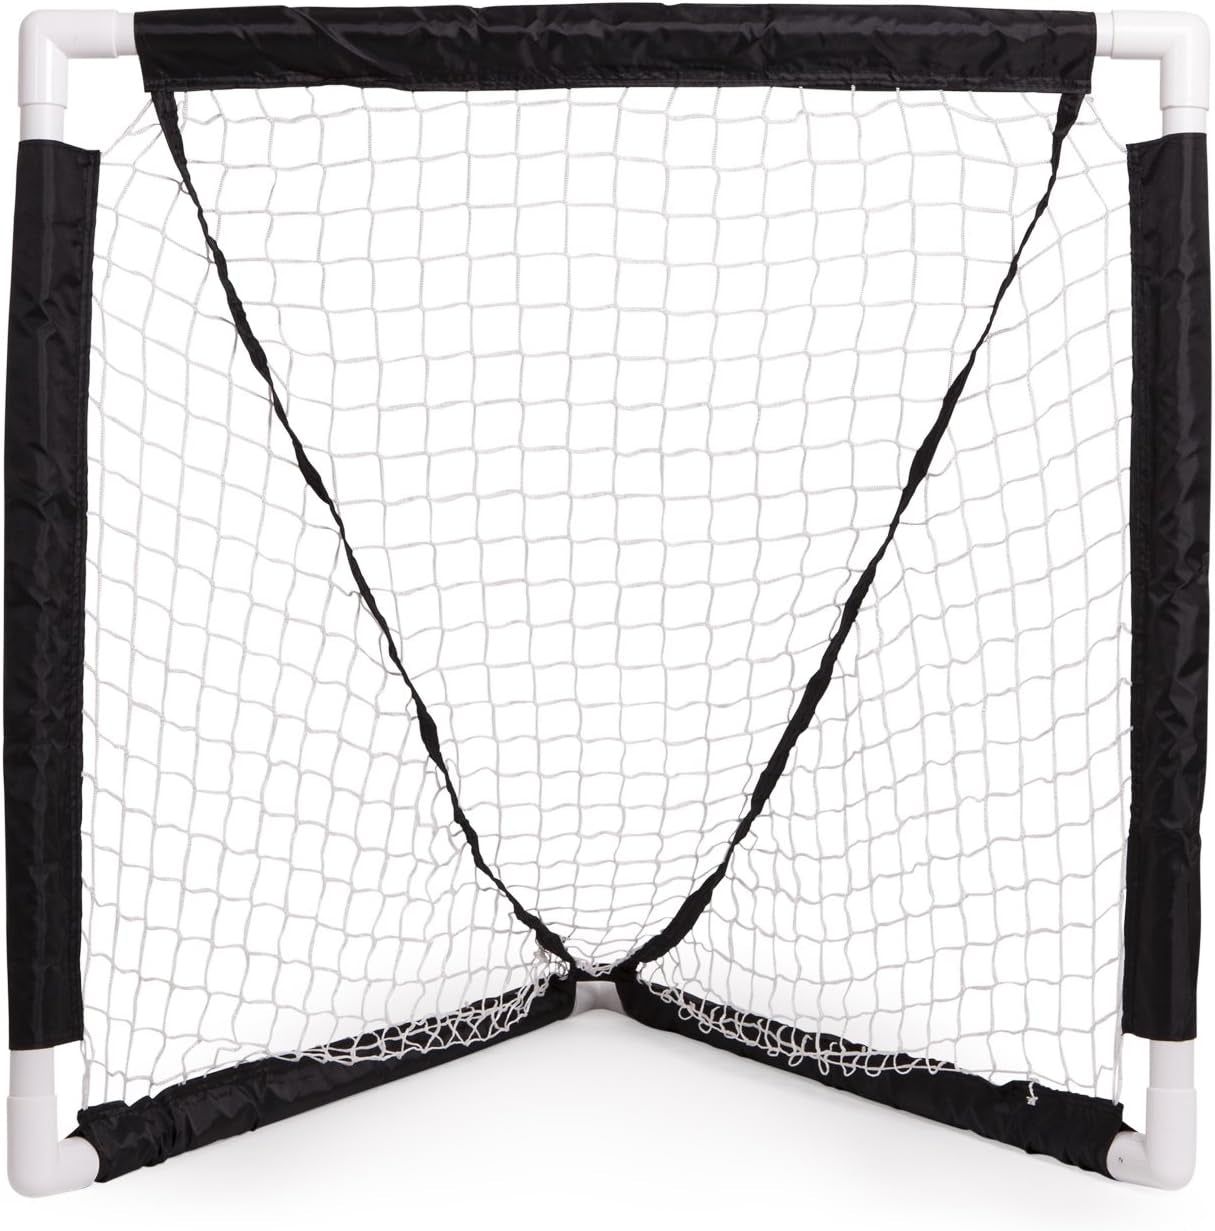 Street Lacrosse® 3x3 Goal by Champion Sports